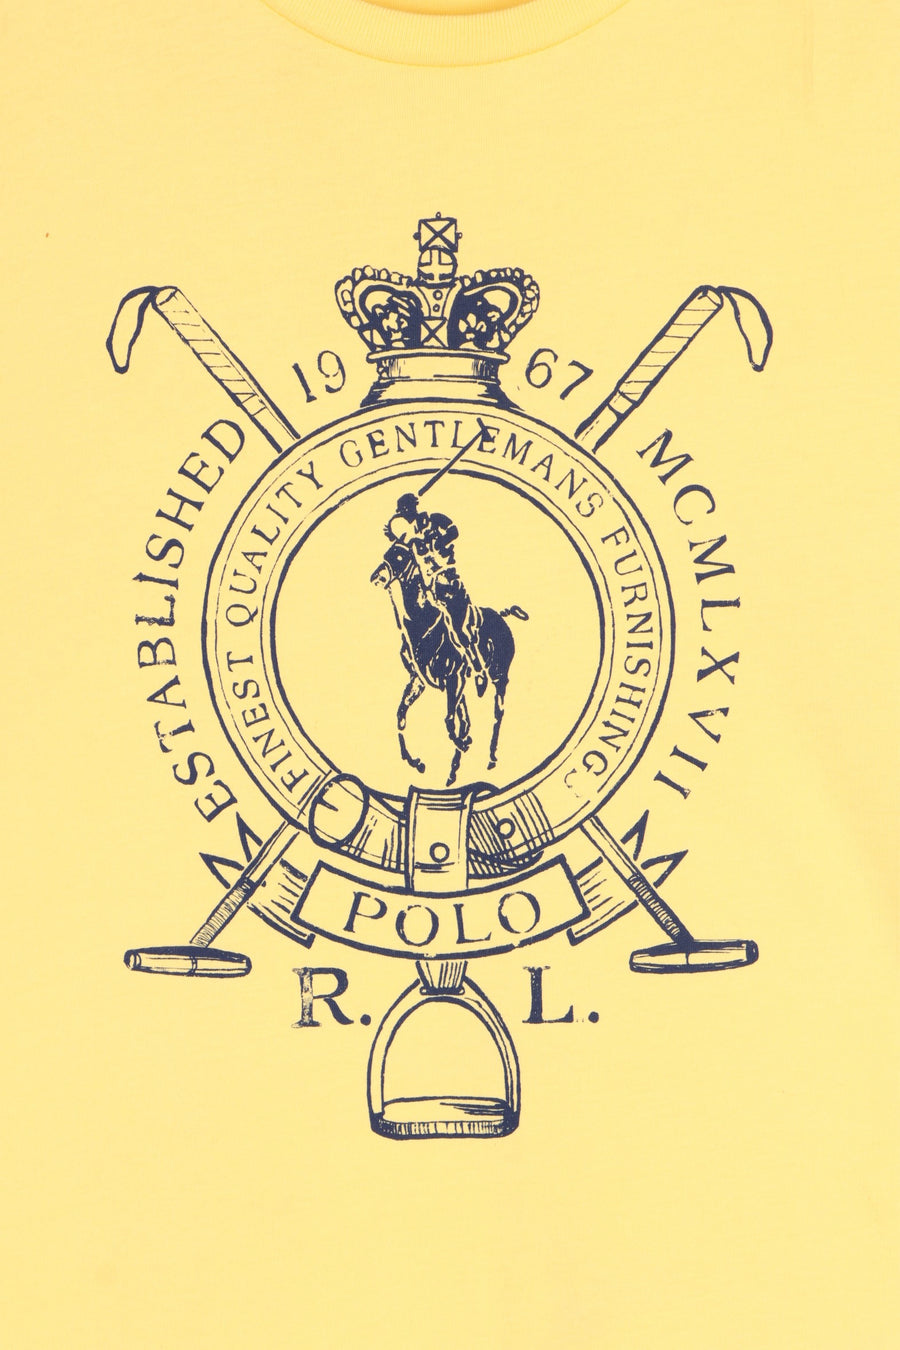 RALPH LAUREN POLO Big Equestrian Logo Yellow T-Shirt (M-L)